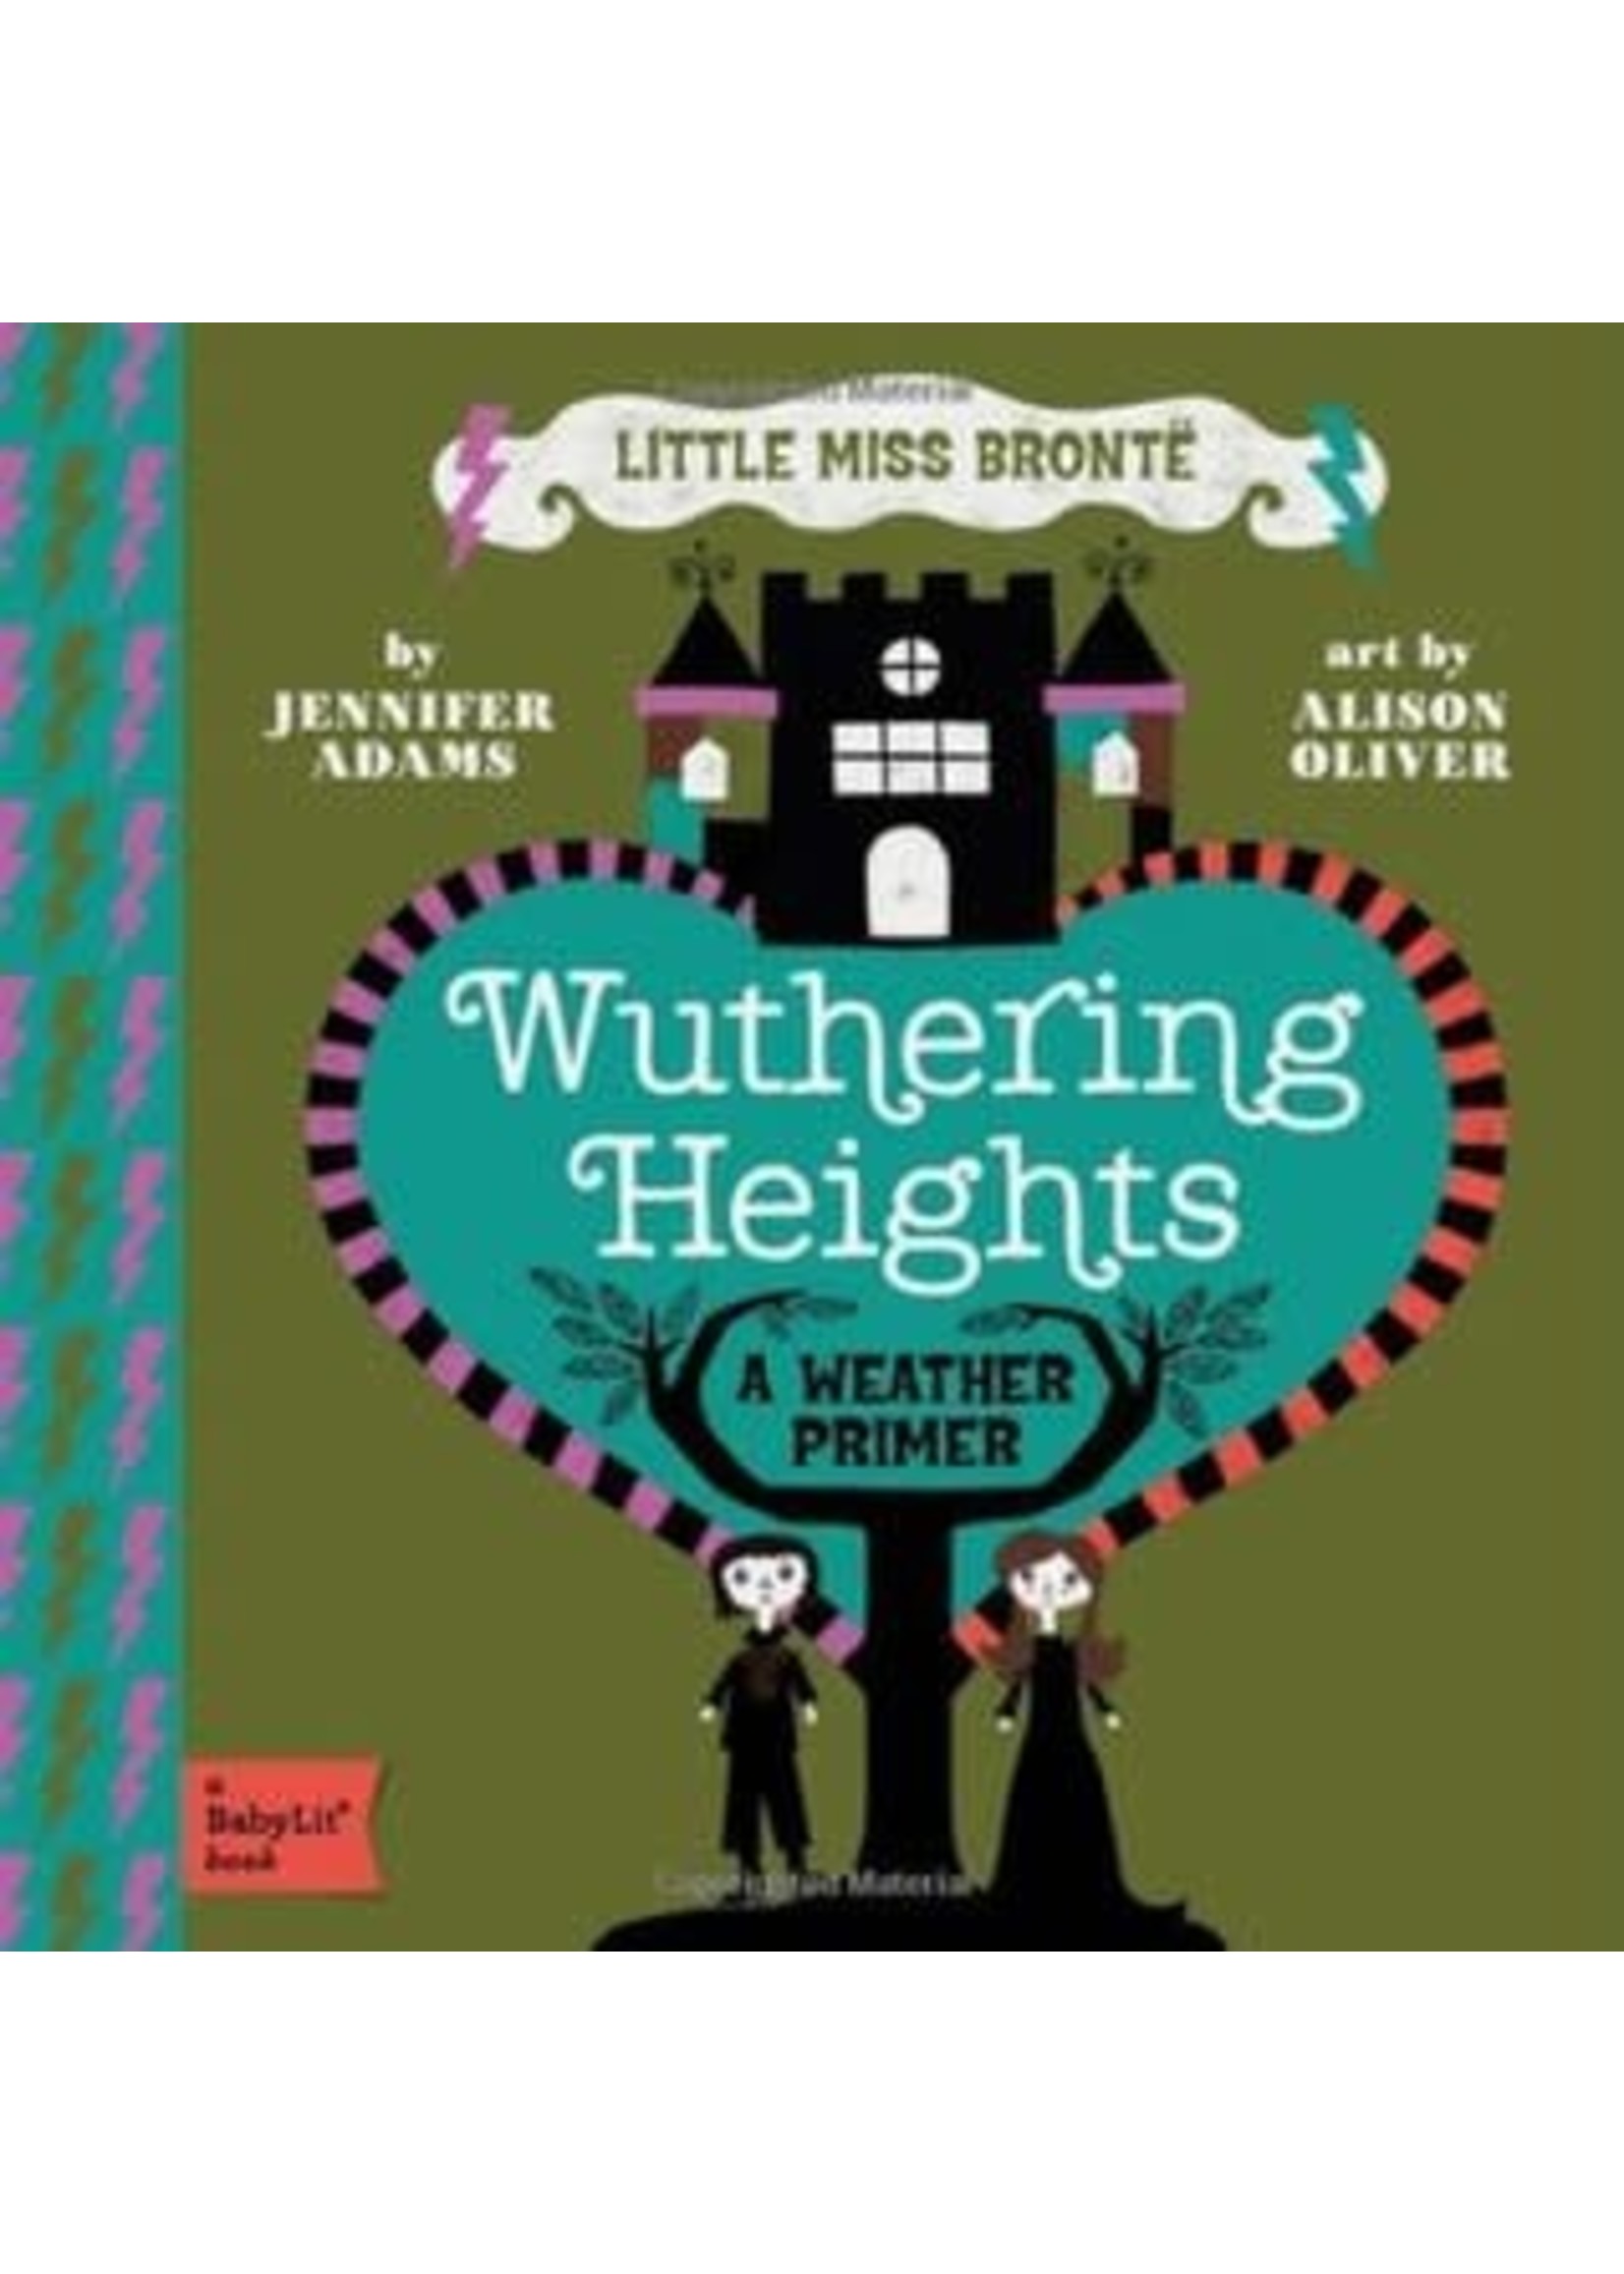 Wuthering Heights: A BabyLit Weather Primer by Jennifer Adams,  Alison Oliver